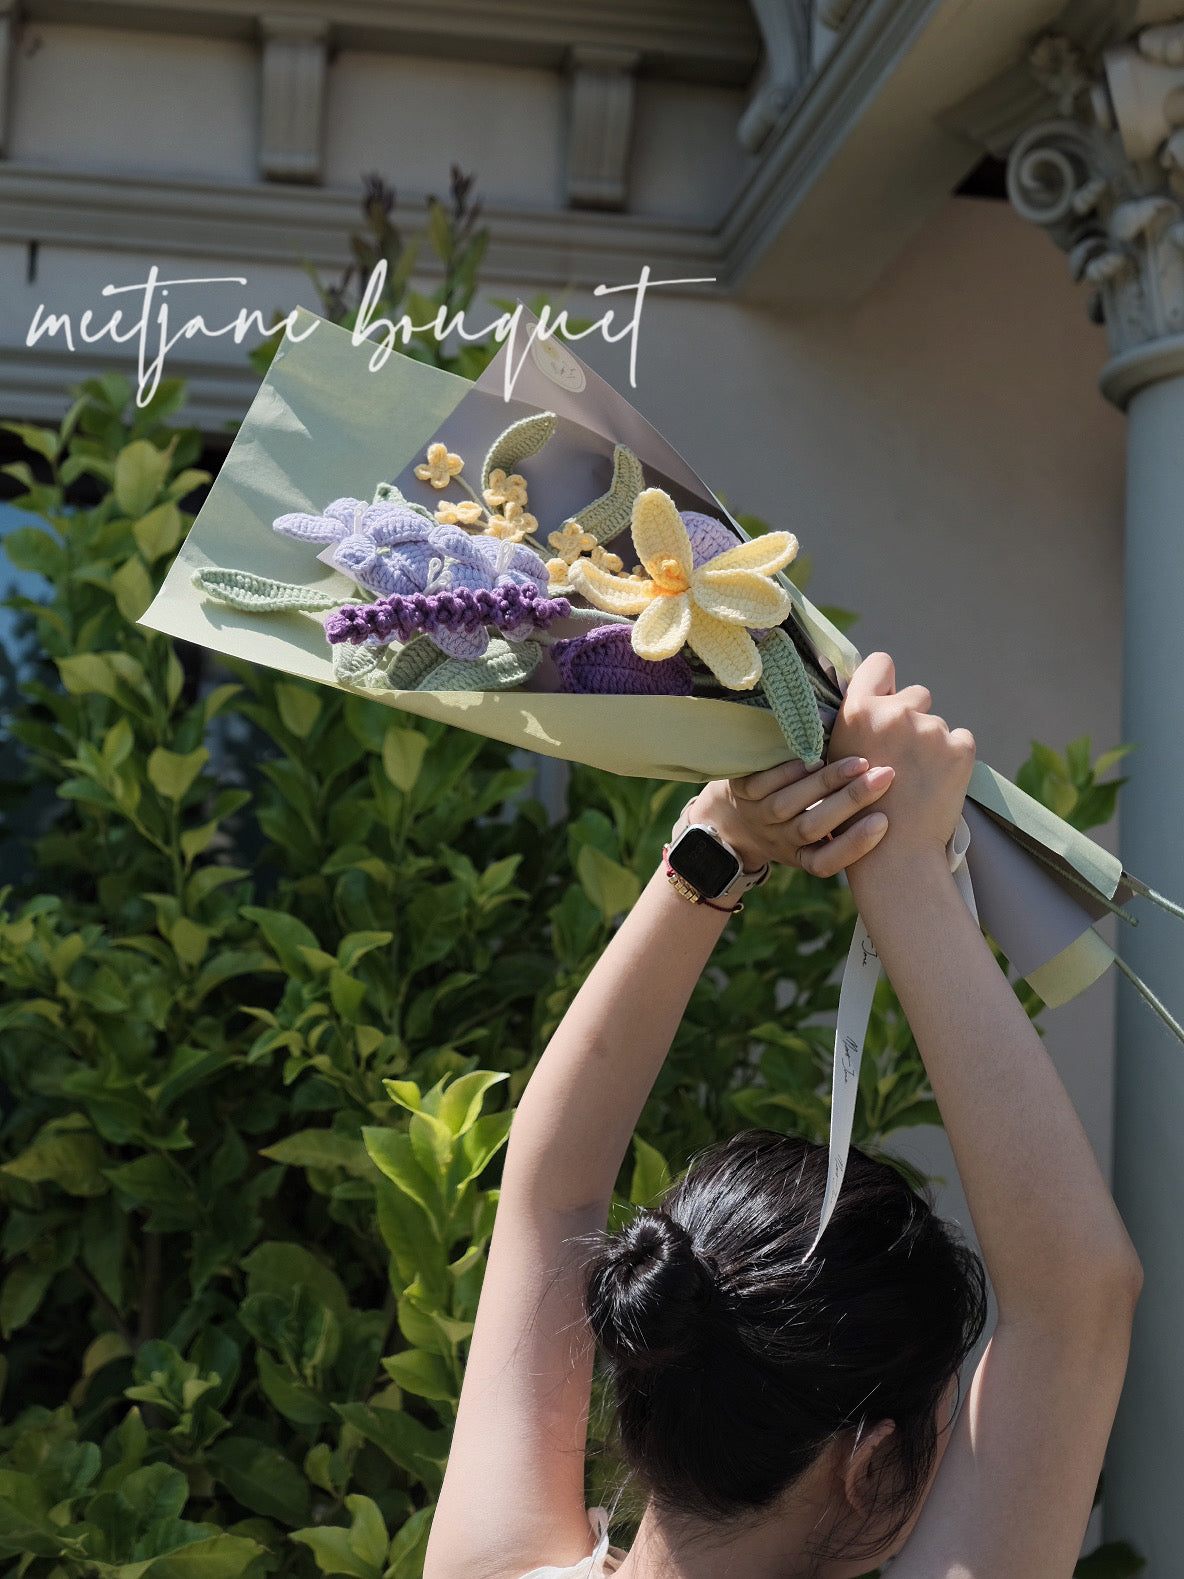 Meetjane Bouquet|Melbourne handmade |Summer day in Melbonurne